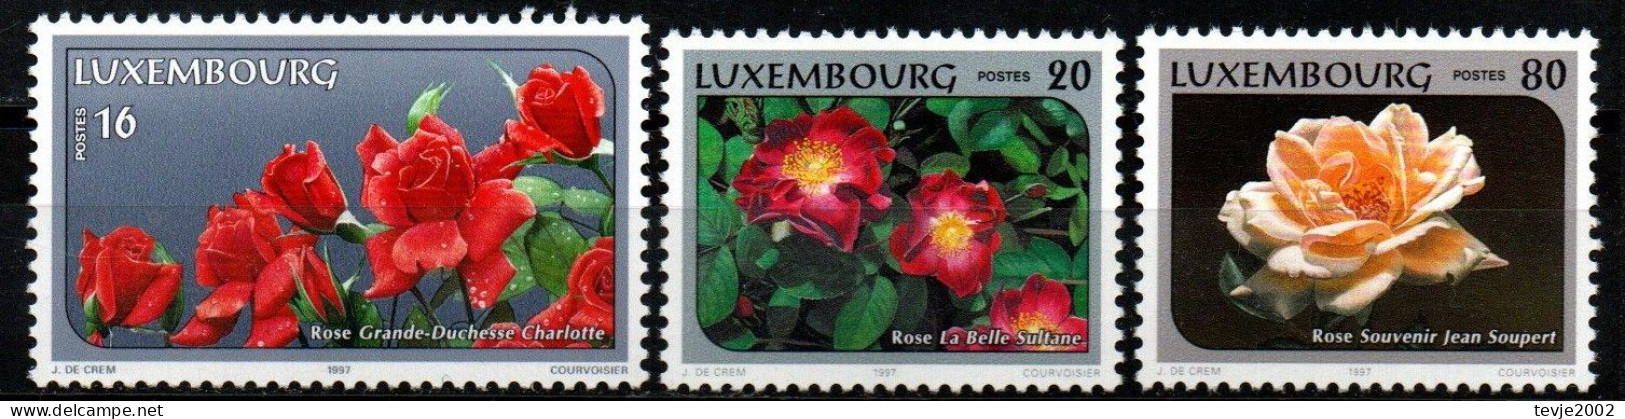 Luxemburg 1997 - Mi.Nr. 1411 - 1413 - Postfrisch MNH - Blumen Flowers Rosen Roses - Rosas